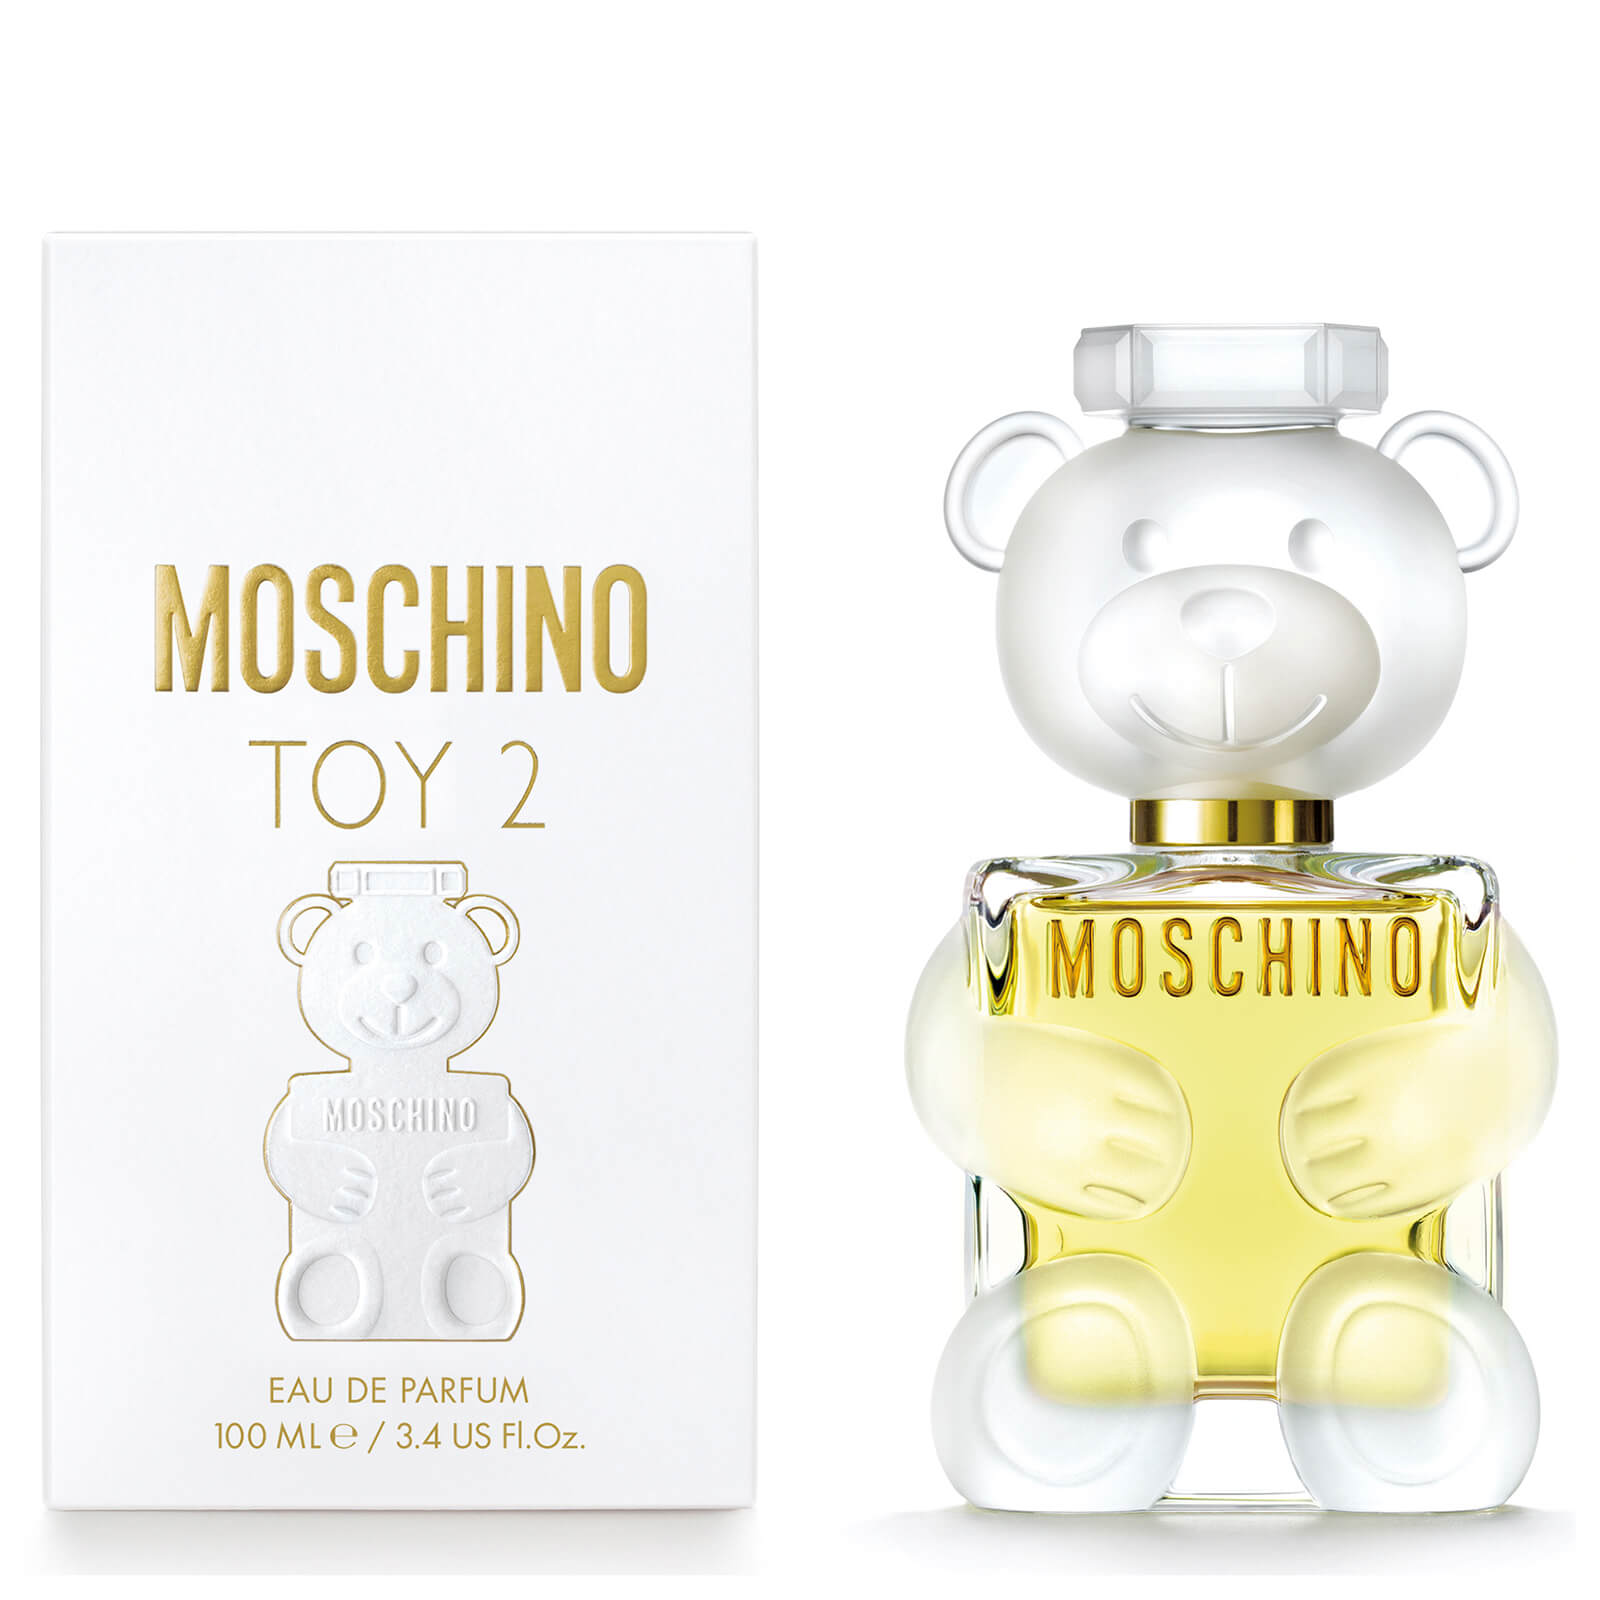 moschino toy 2 perfume